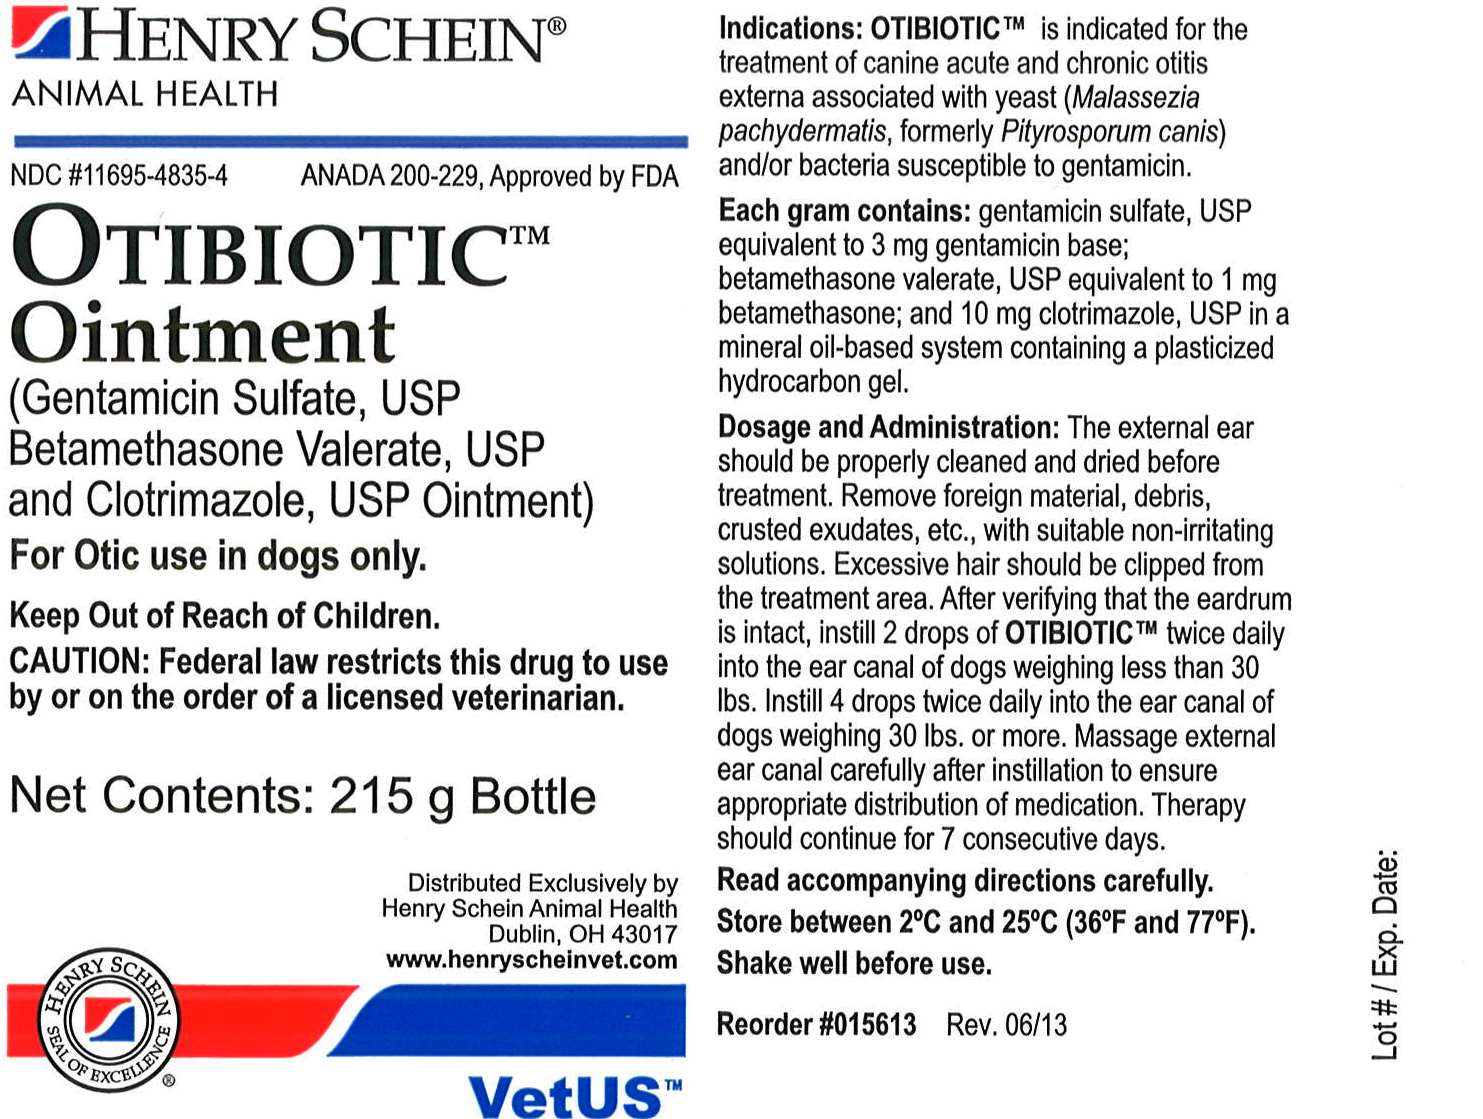 Otibiotic Ointment 215g Bottle